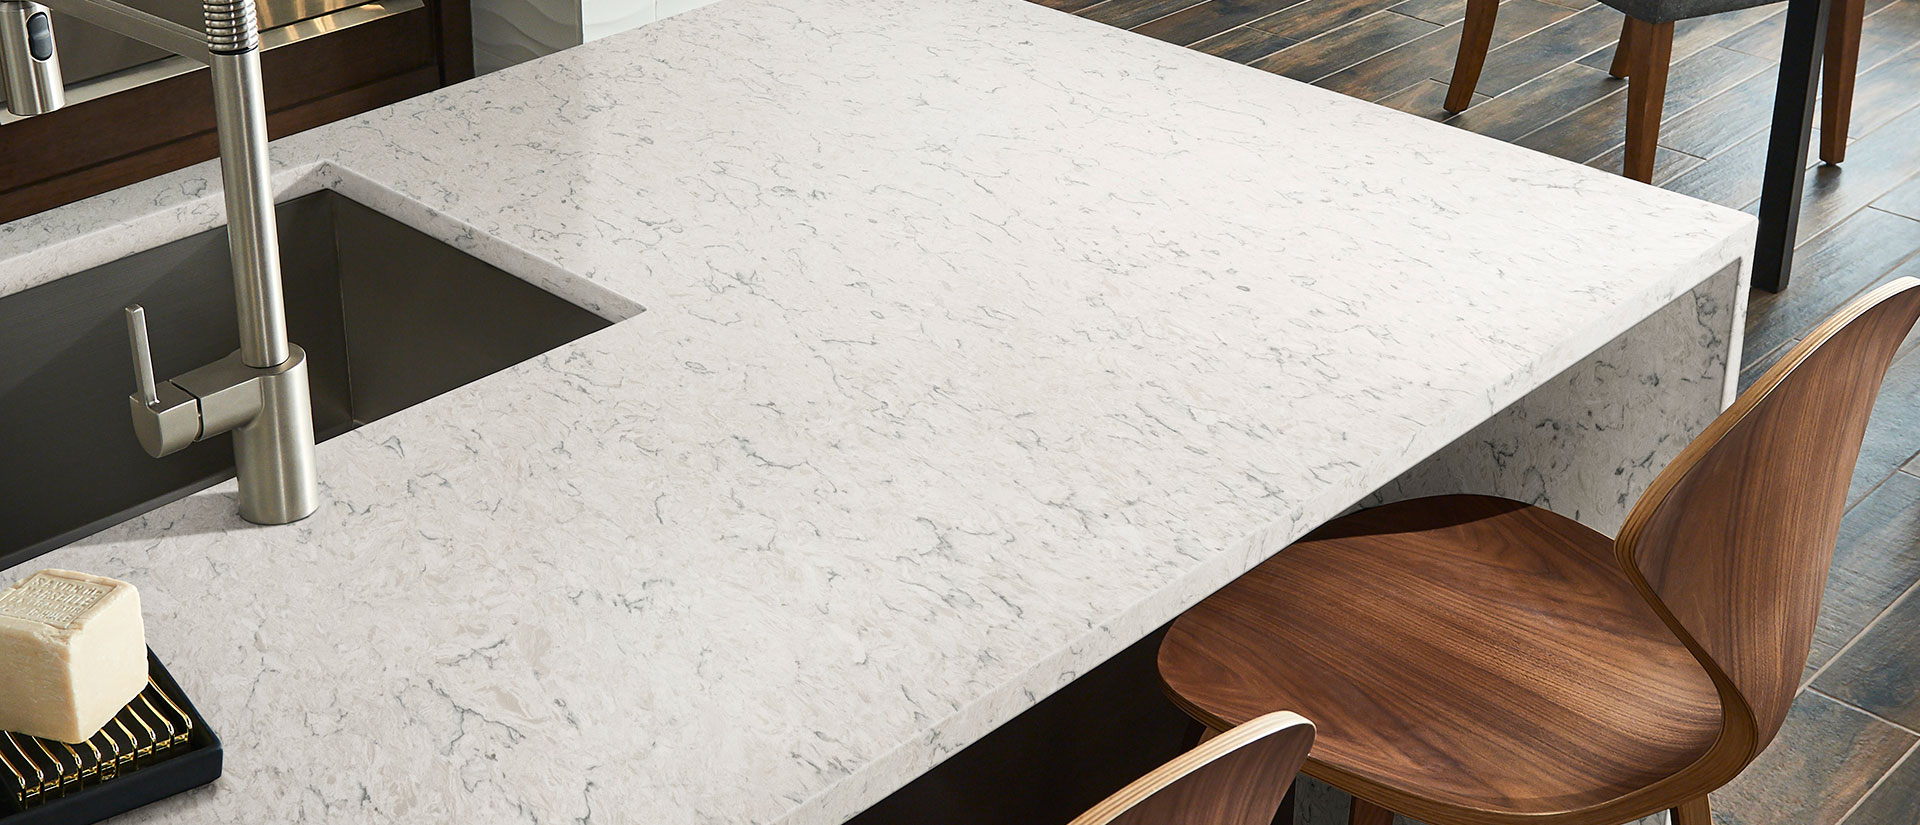 Carrara Mist Quartz countertop in a minimalist kitchen with wood accents